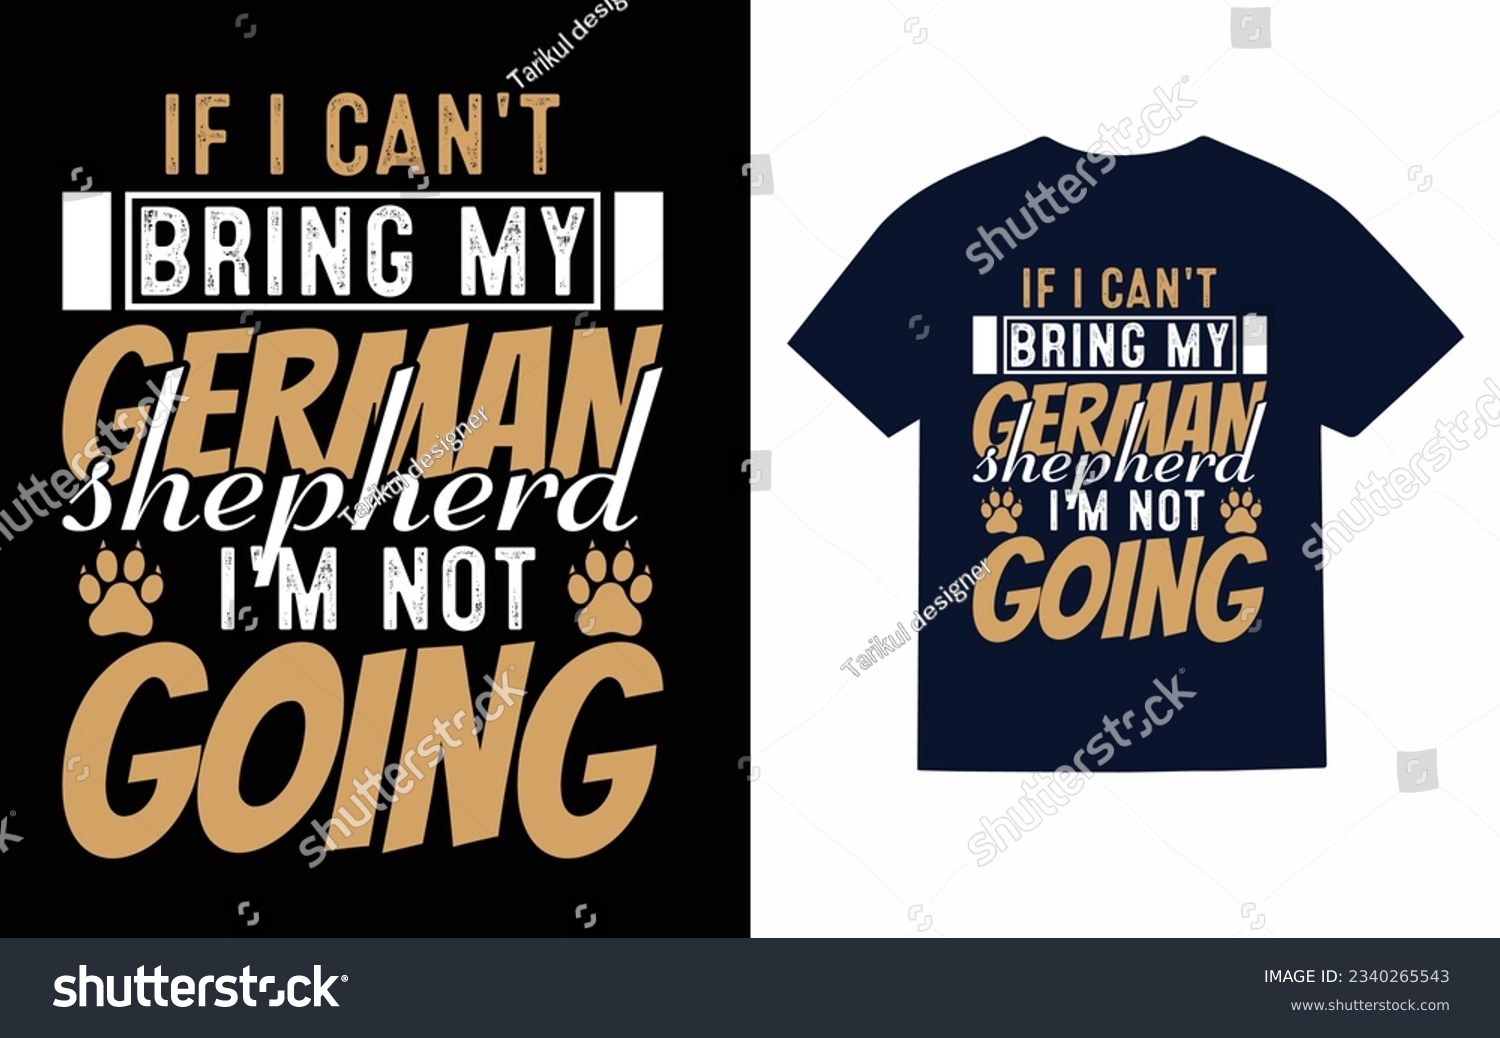 SVG of if i can't bring my german shepherd i'm not going, shepherds dog t shirt design svg